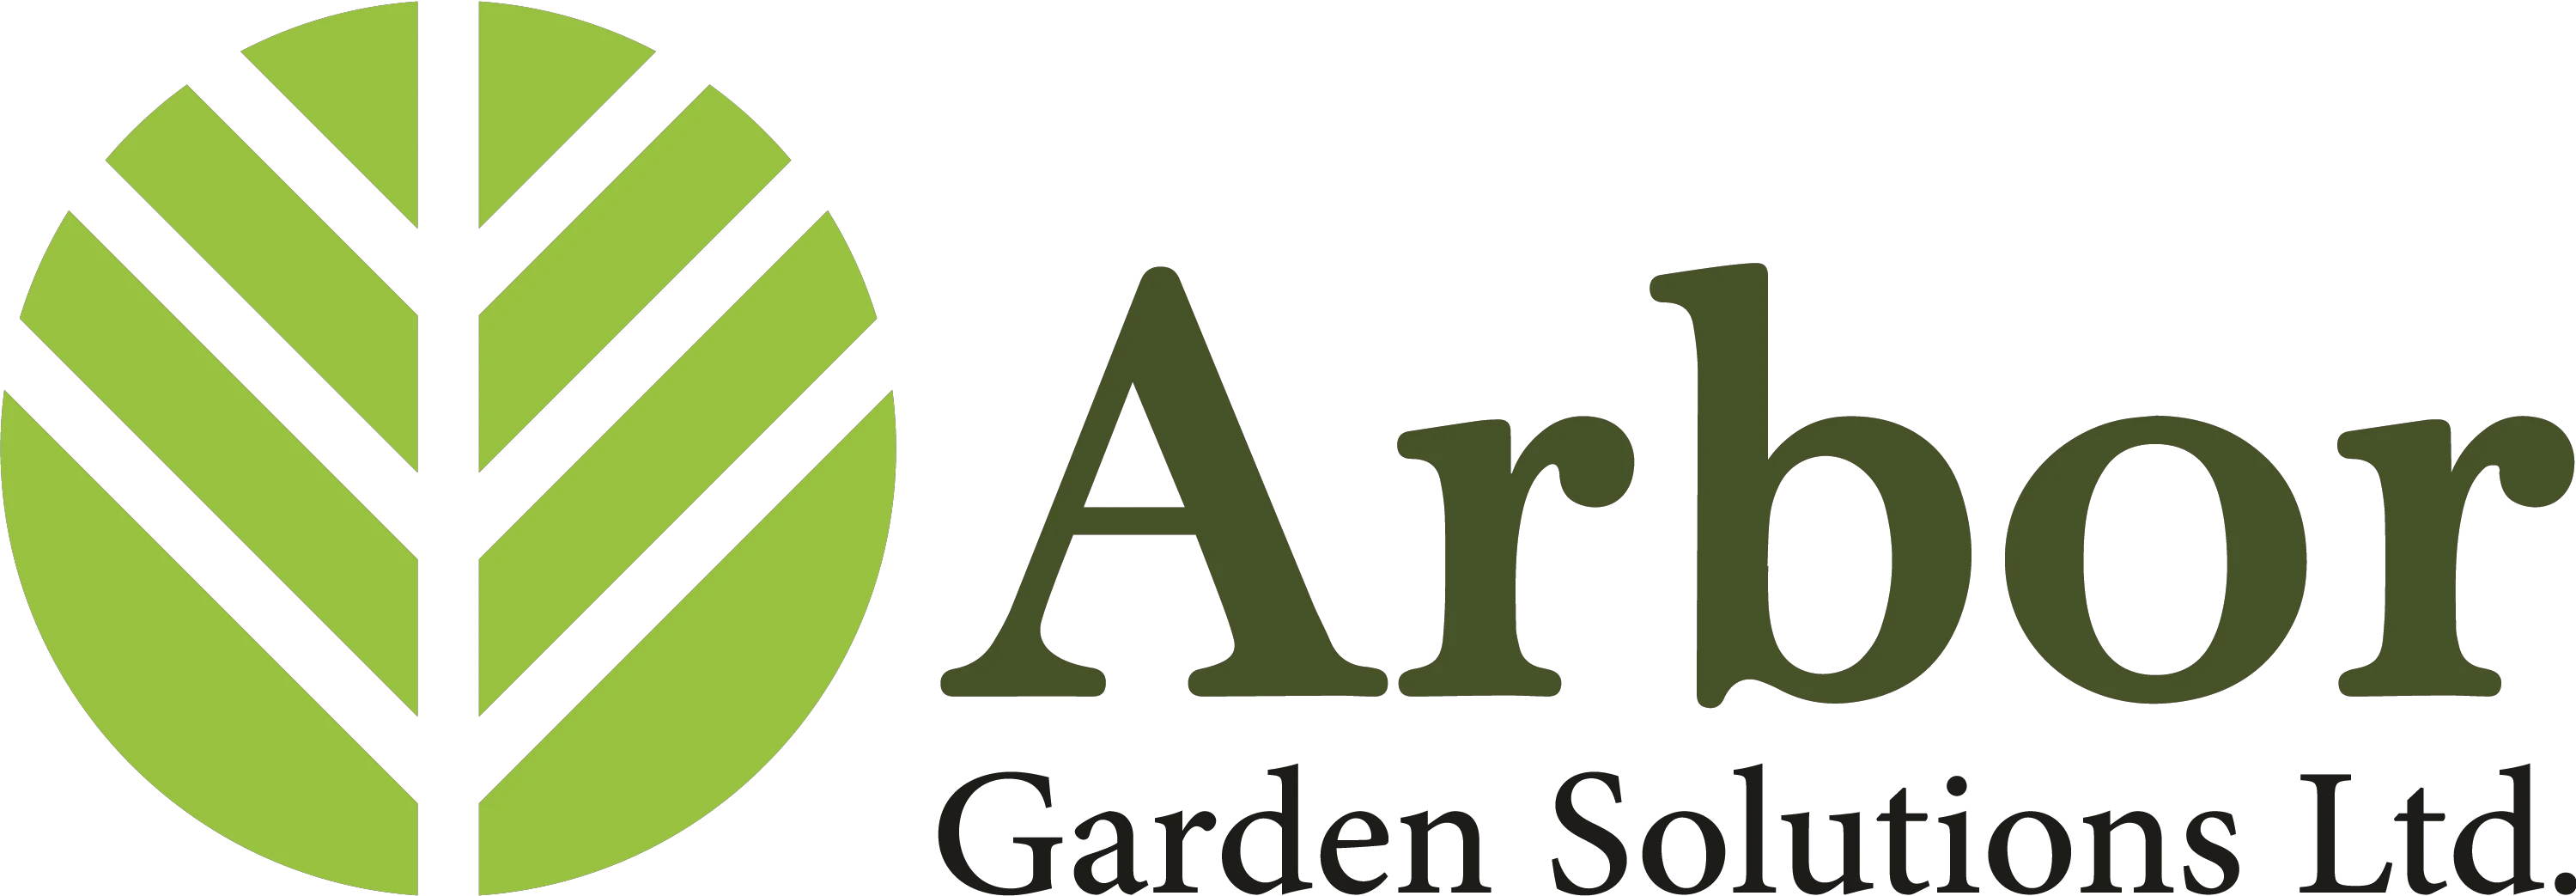 Arbor Garden Solutions Coupon 